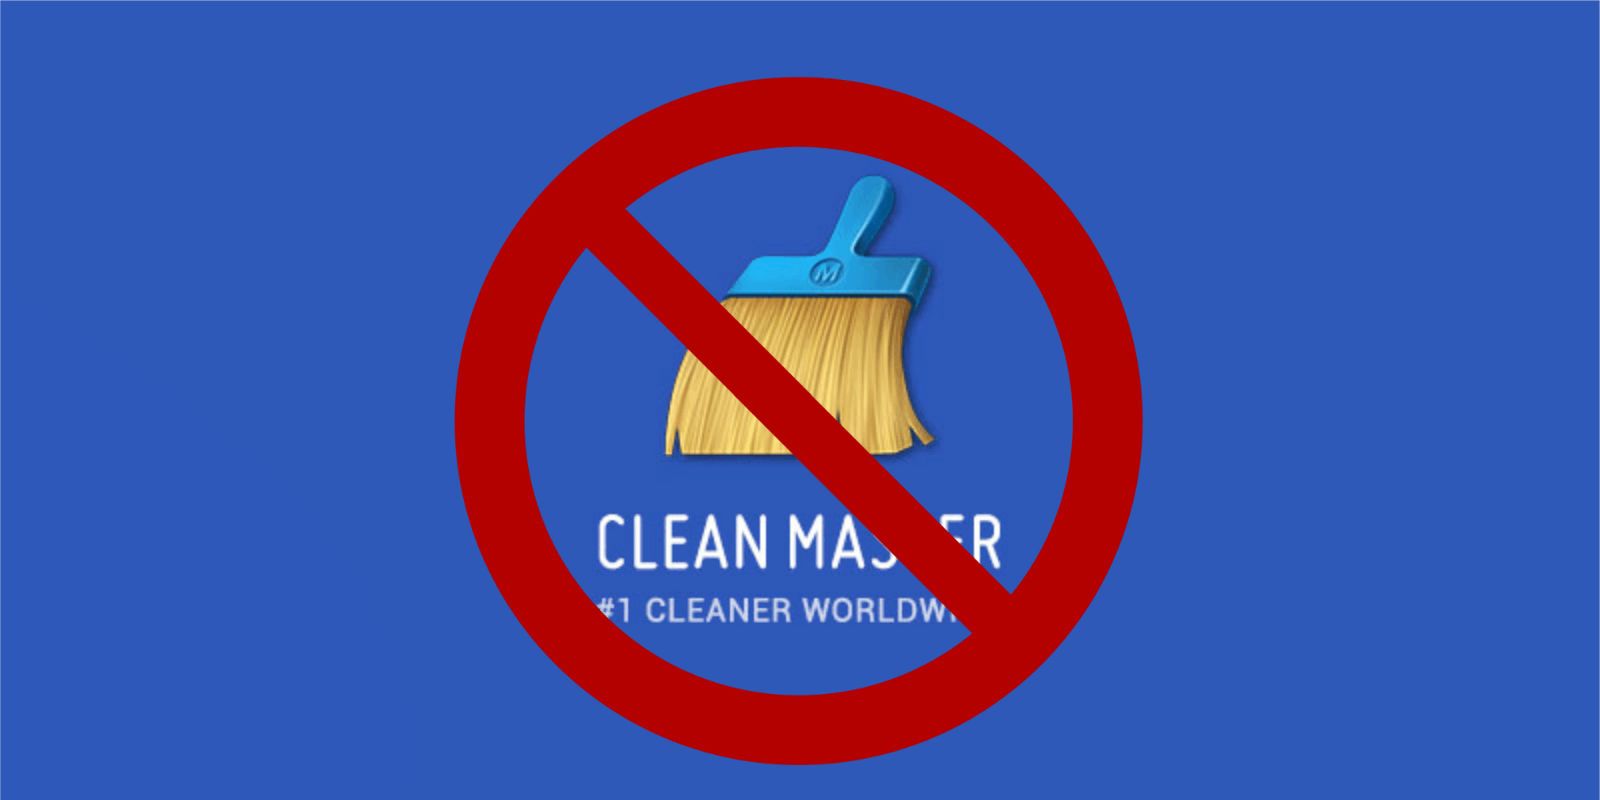 free clean master app